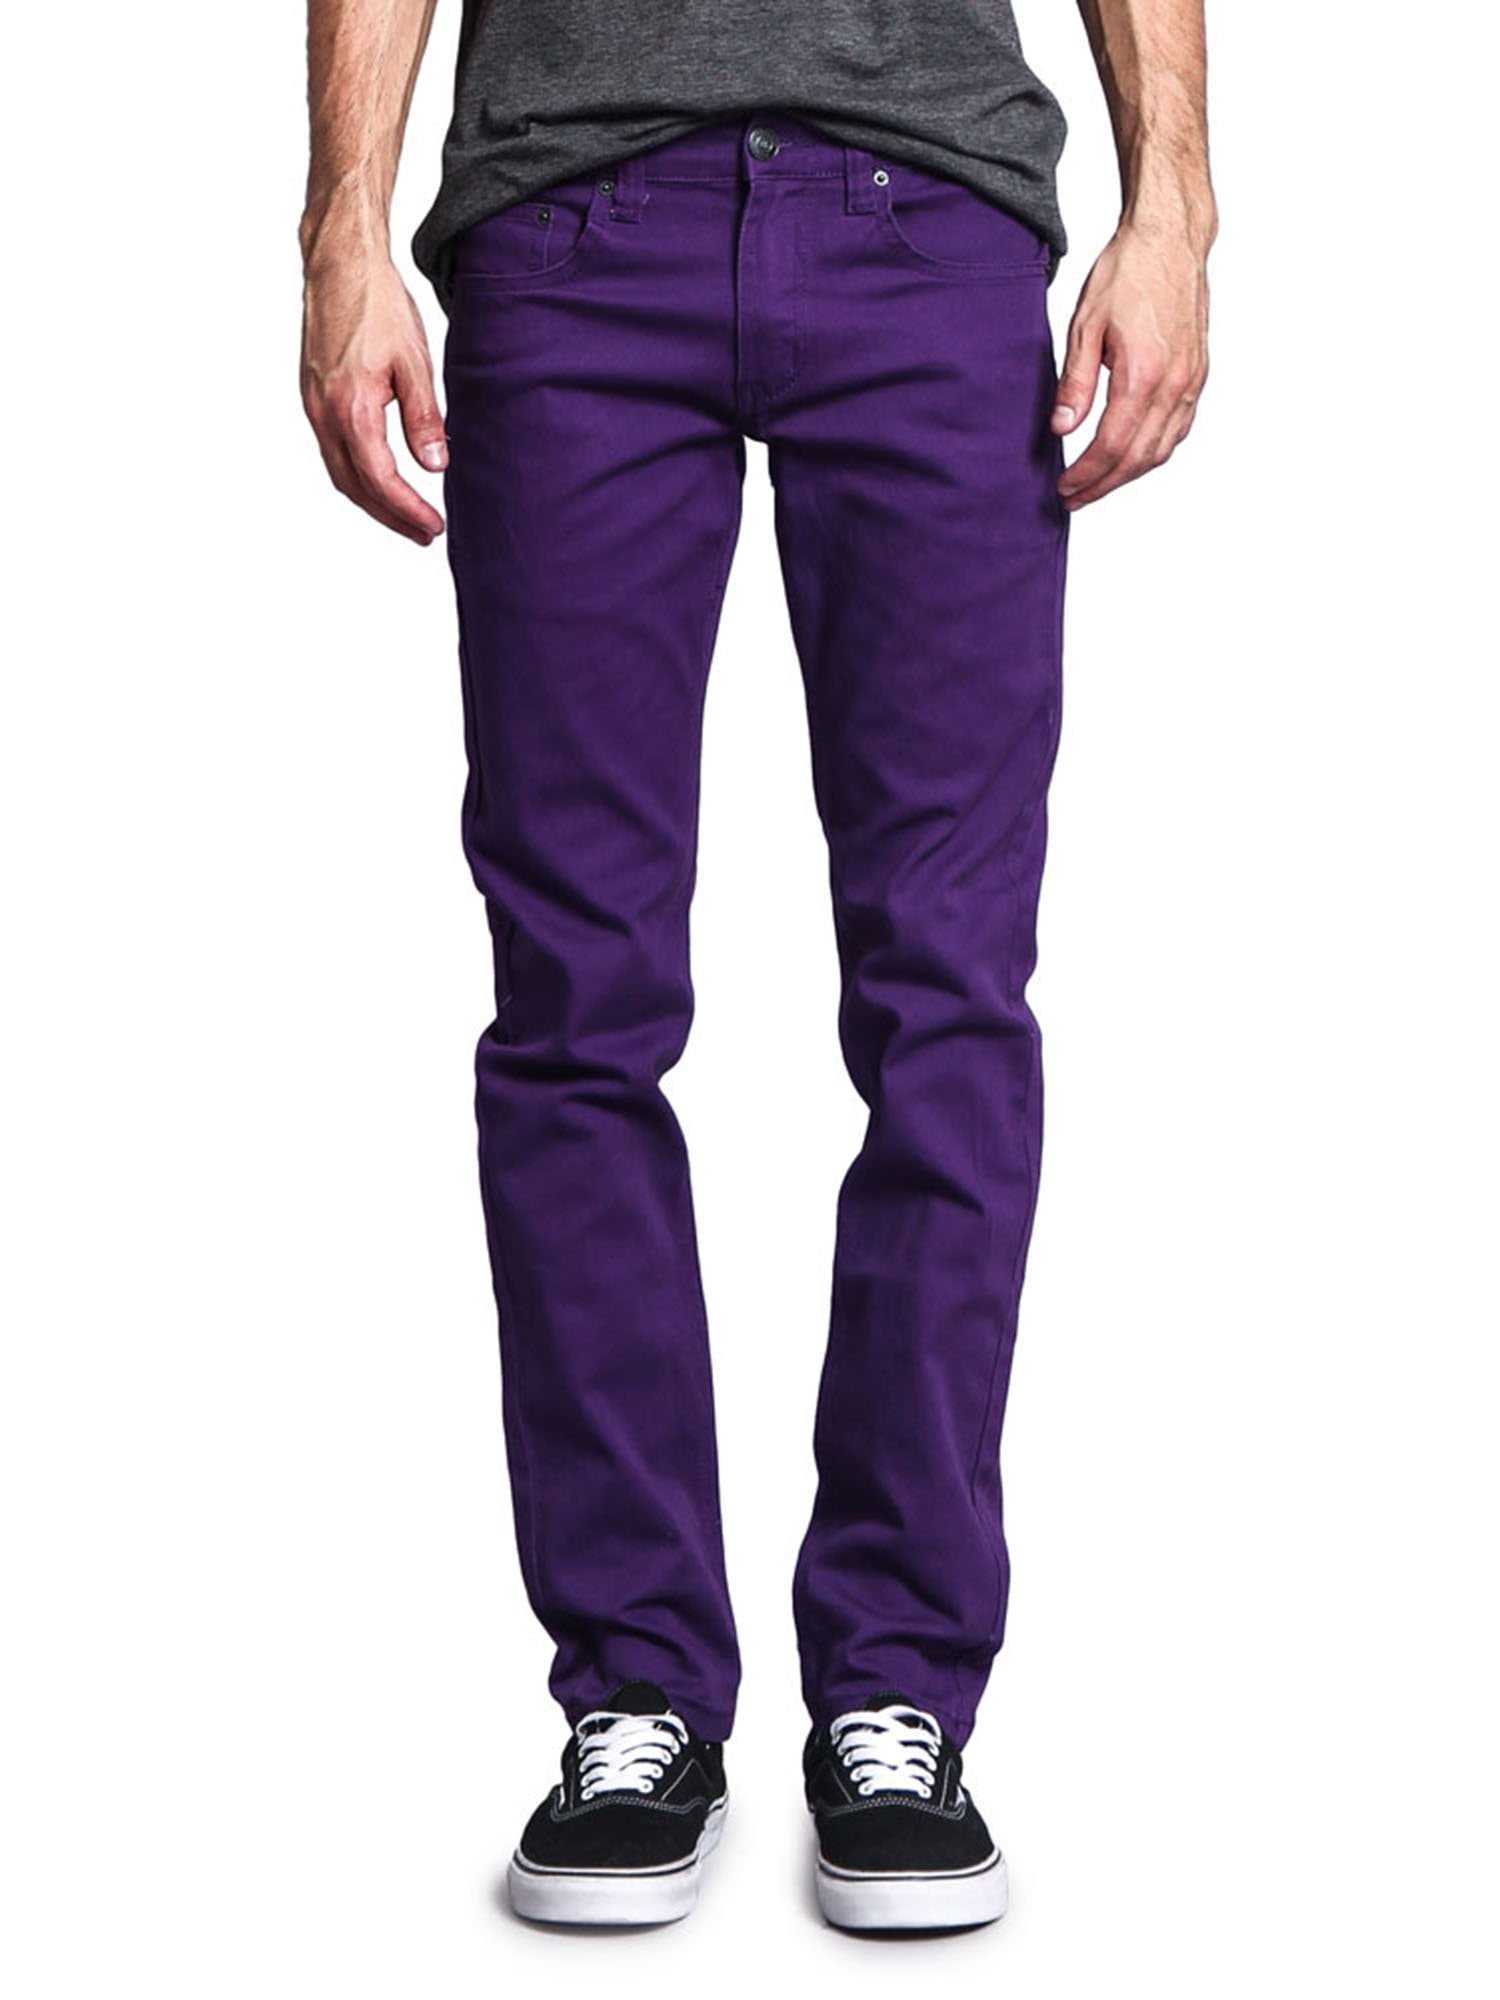 purple denim jeans mens